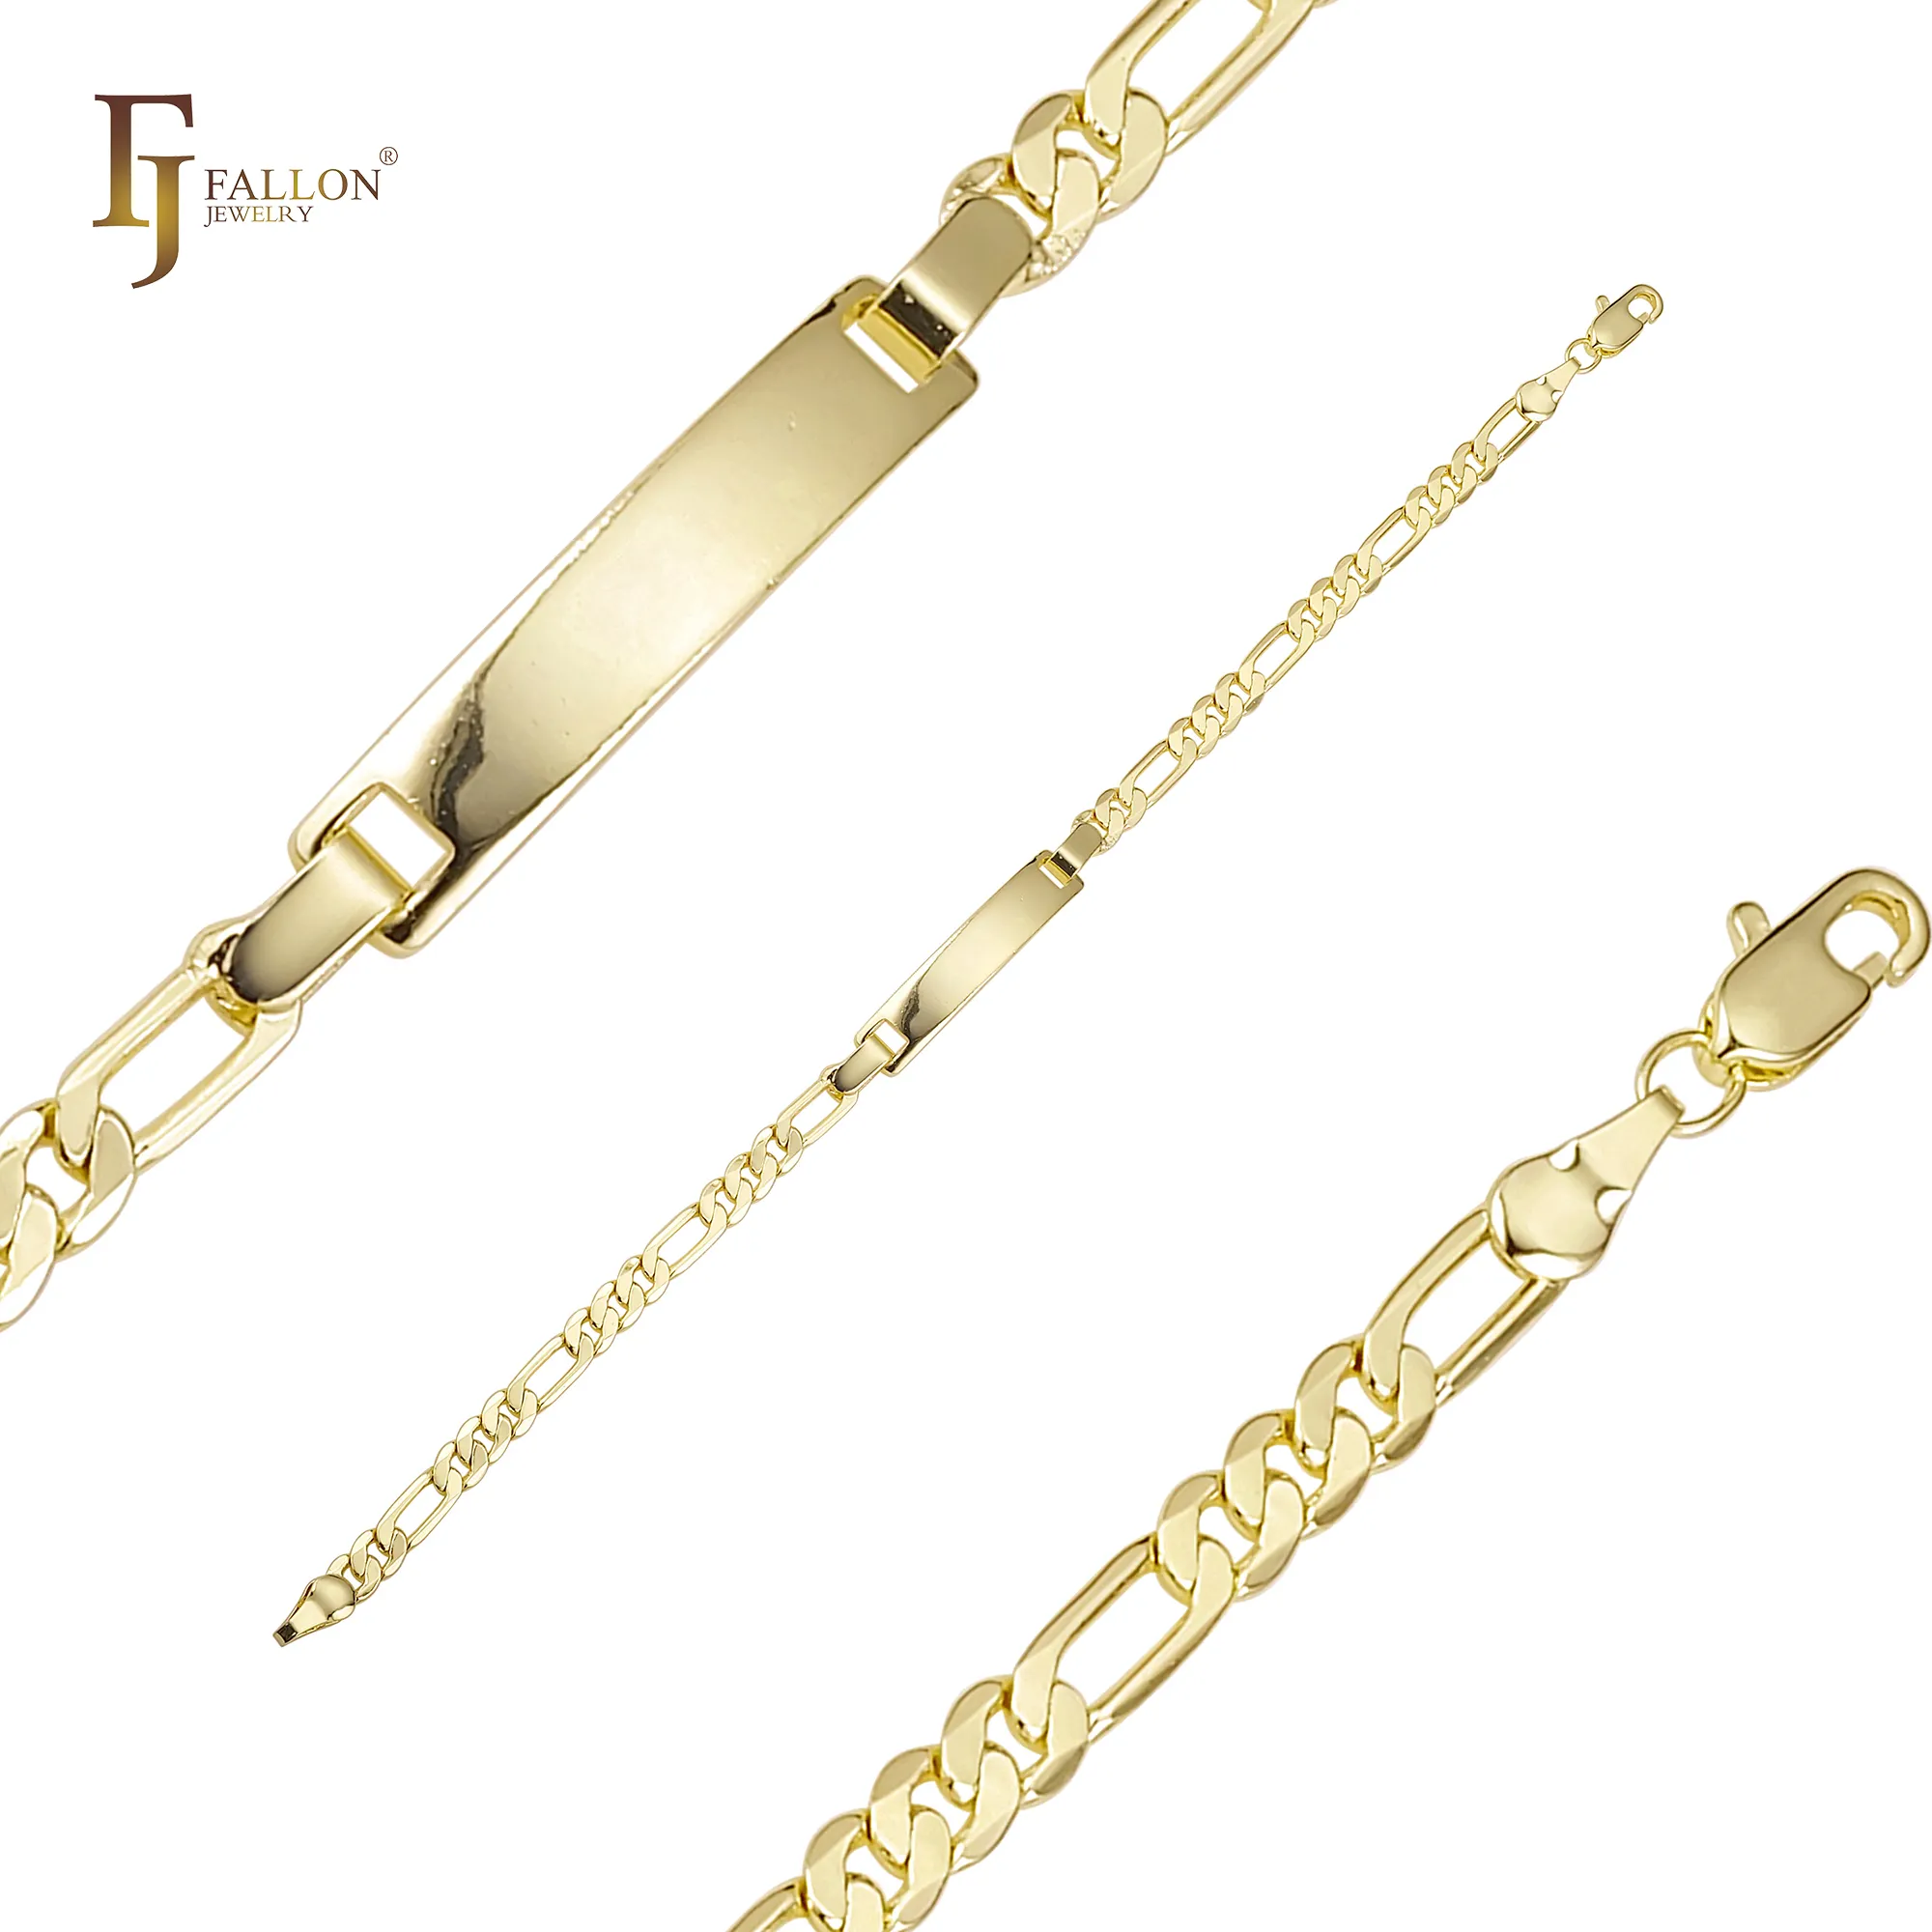 55100139 FJ Fallon Fashion Jewelry Figaro link engraveable Men's ID bracelets in box clasp 14K Gold plated brass based